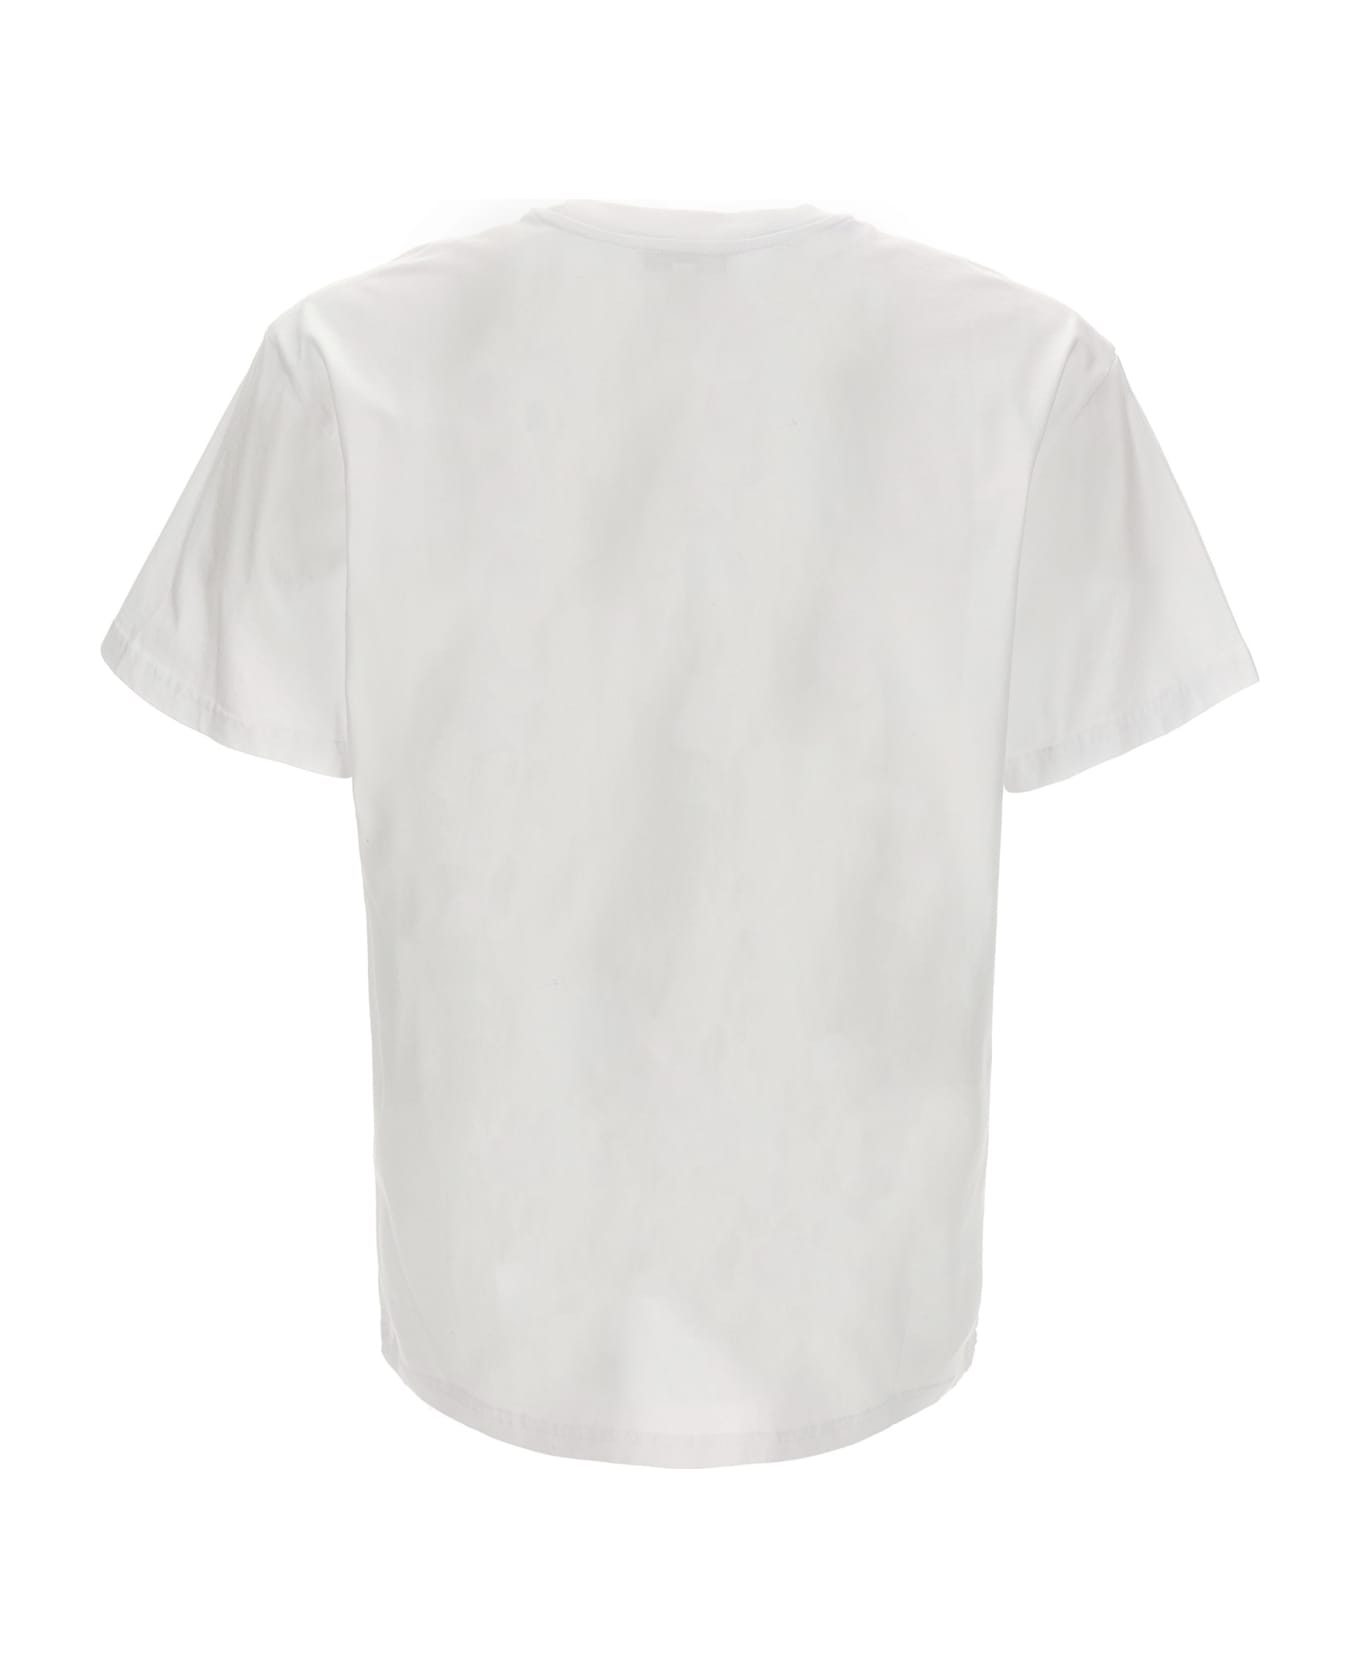 J.W. Anderson 'gnome' T-shirt - White